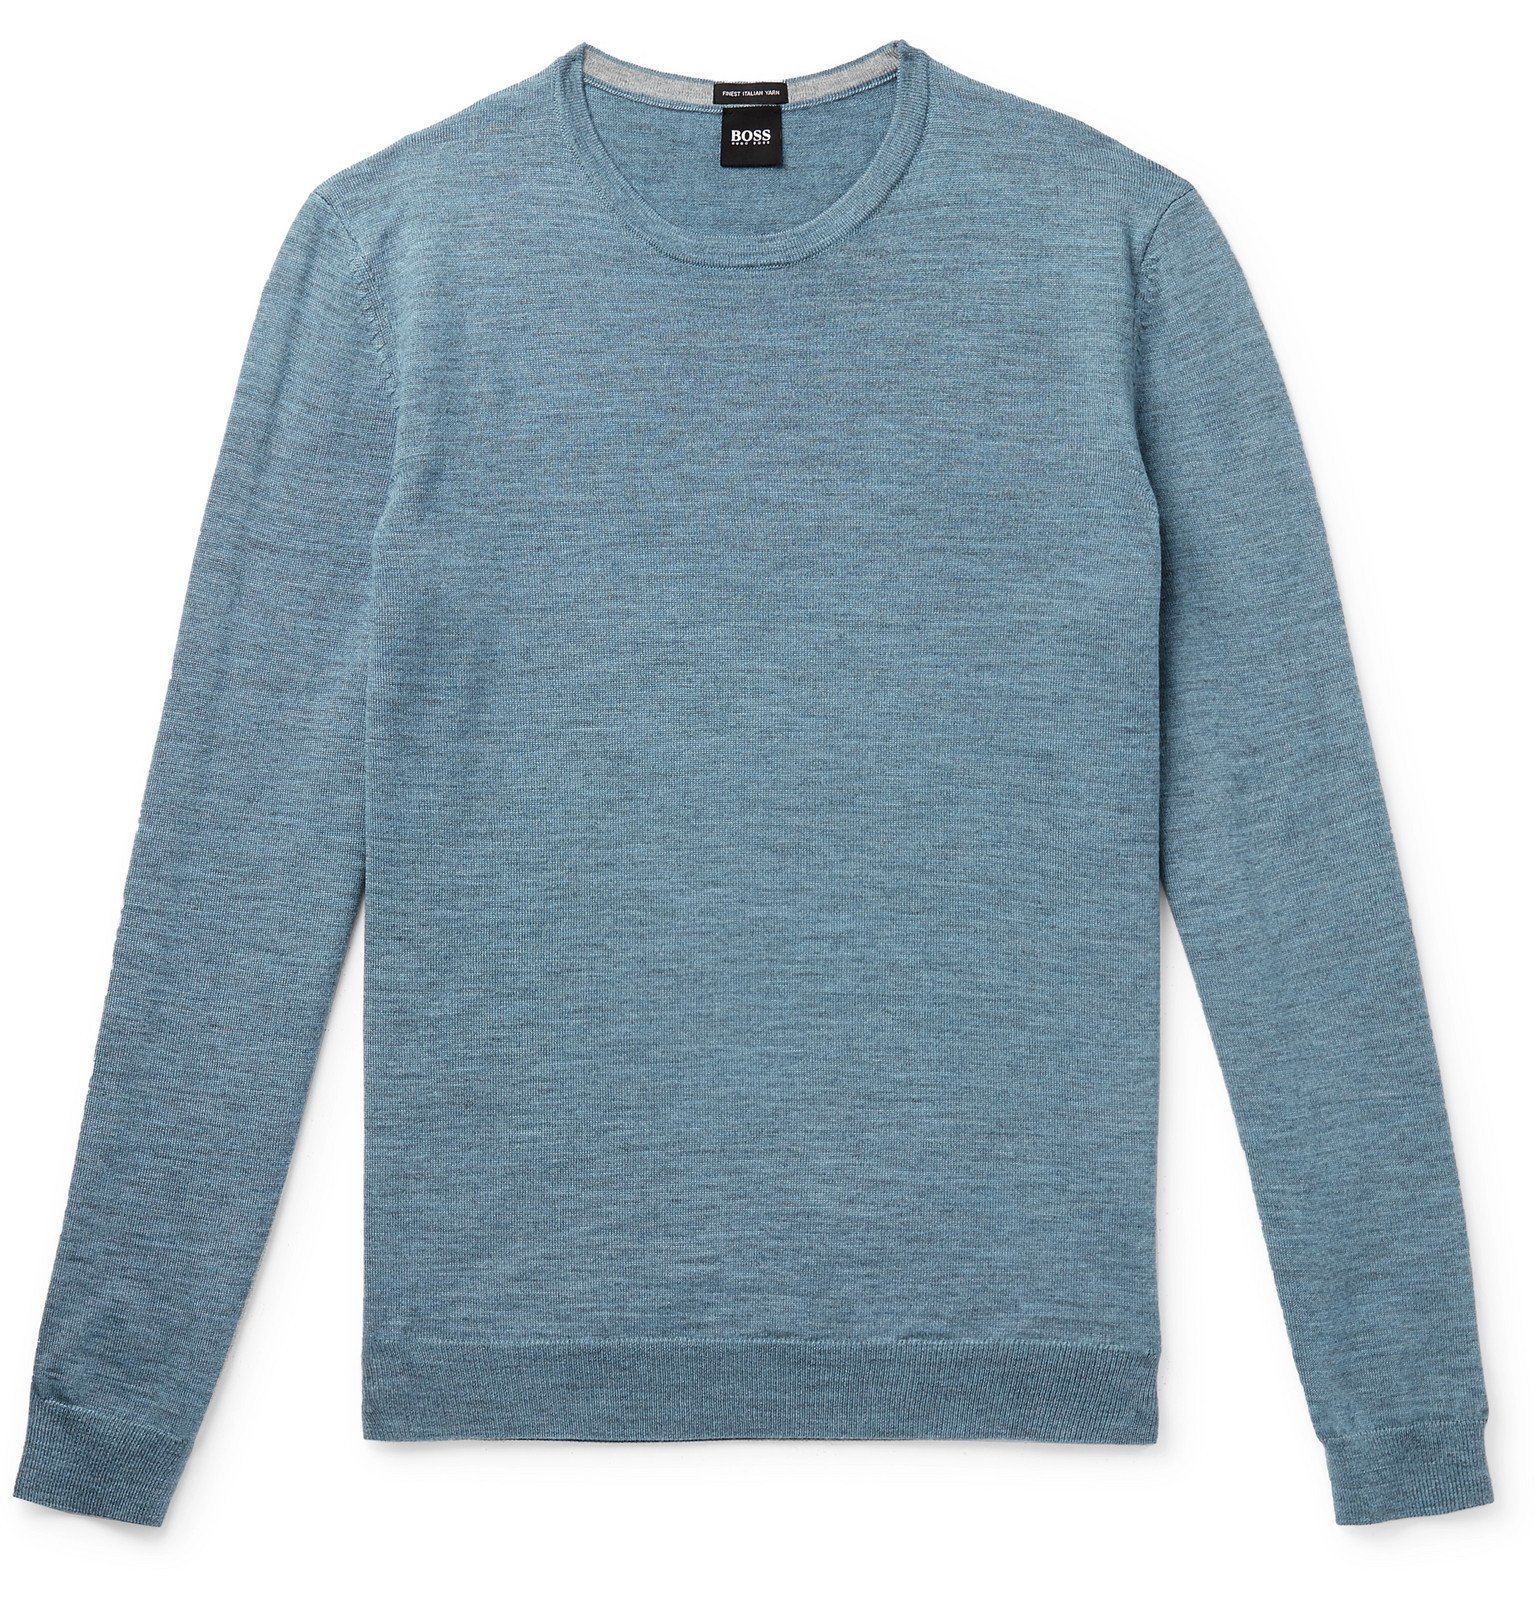 hugo boss sweater blue